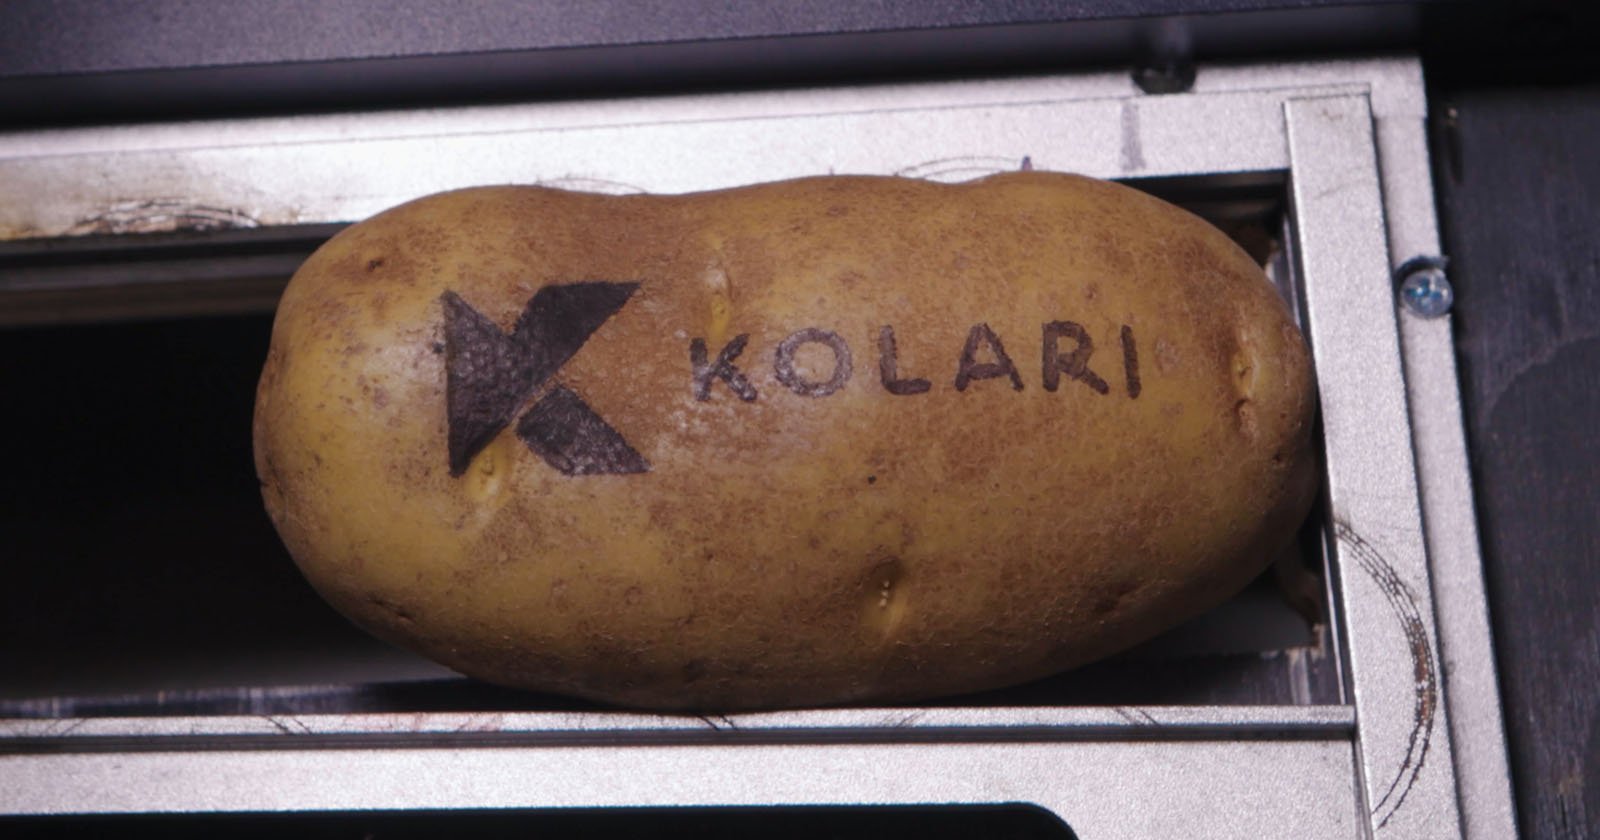 Kolari Vision Takes ‘Potato Quality’ Photography to New Heights